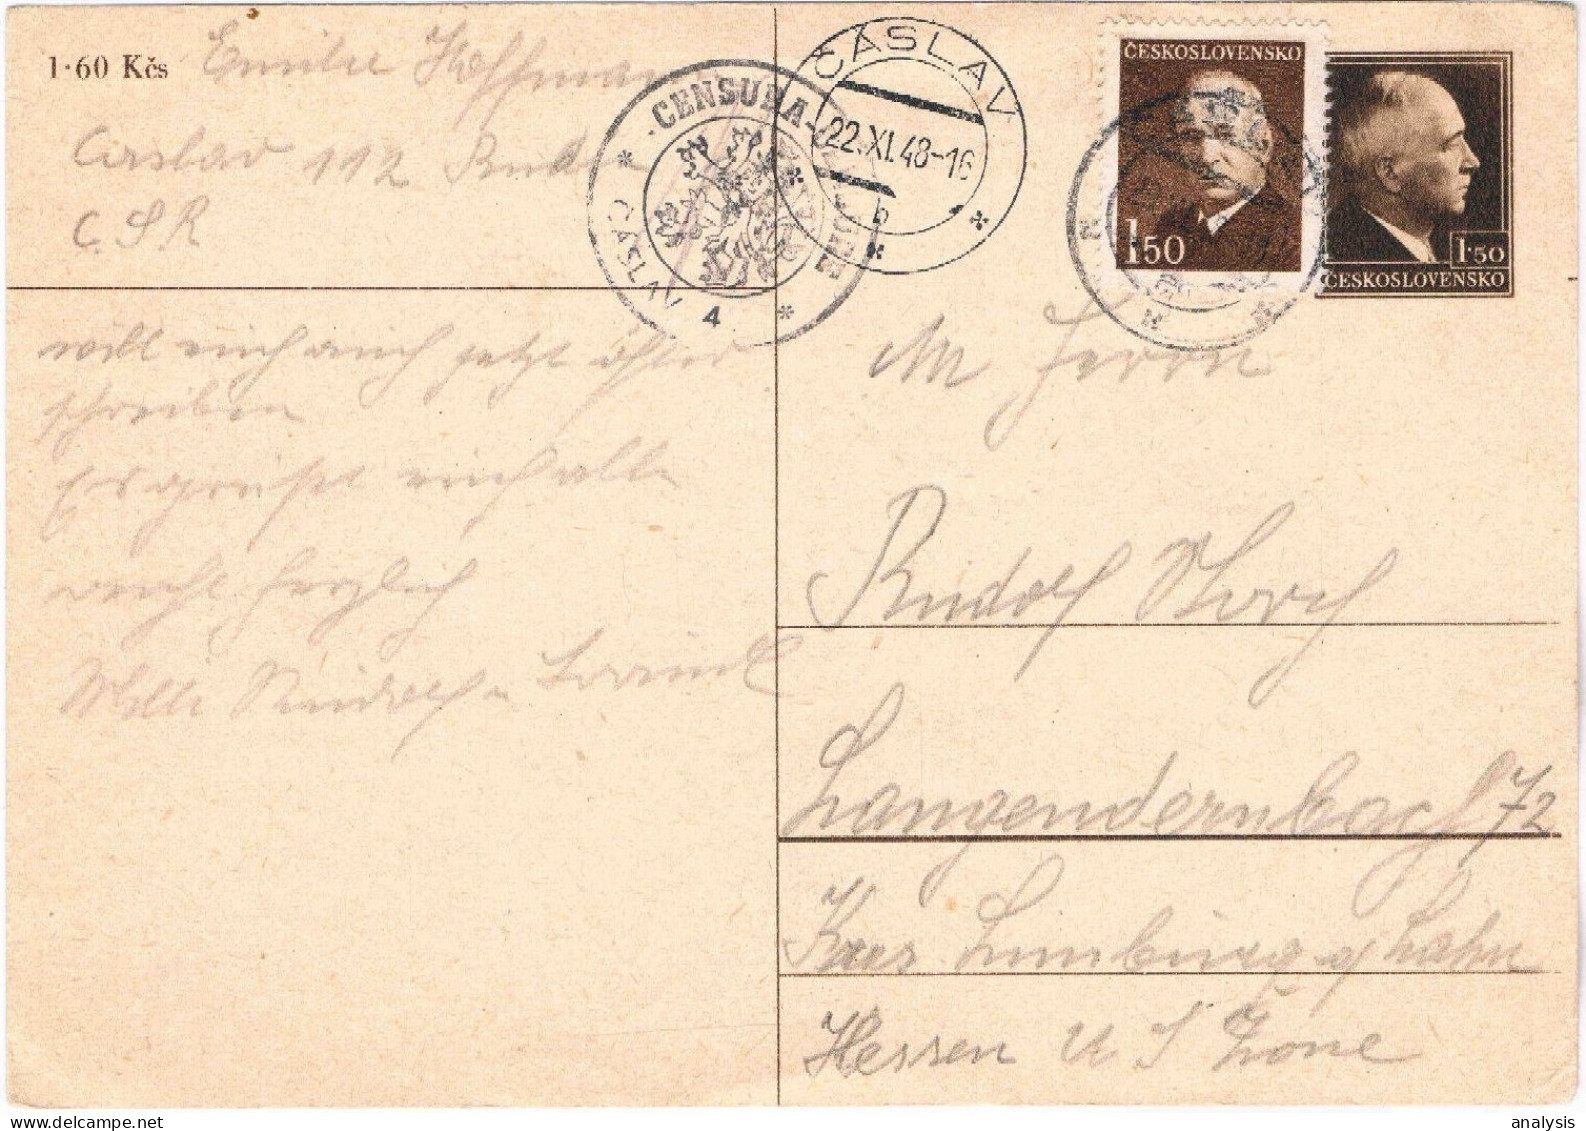 Czechoslovakia Caslav Uprated Postal Stationery Card Mailed To Germany 1948 Censor - Lettres & Documents